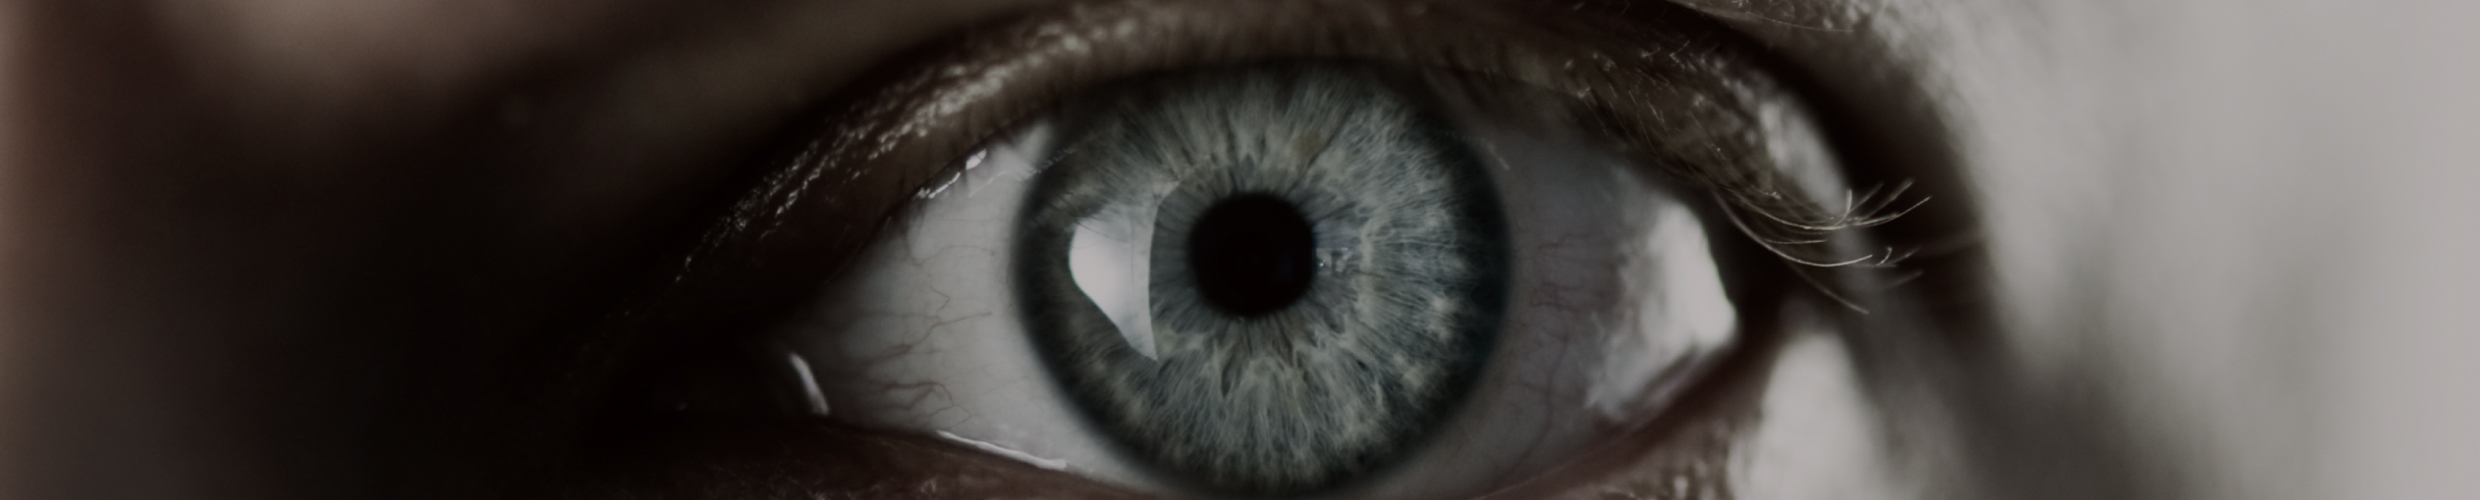 Closeup view of person's eye